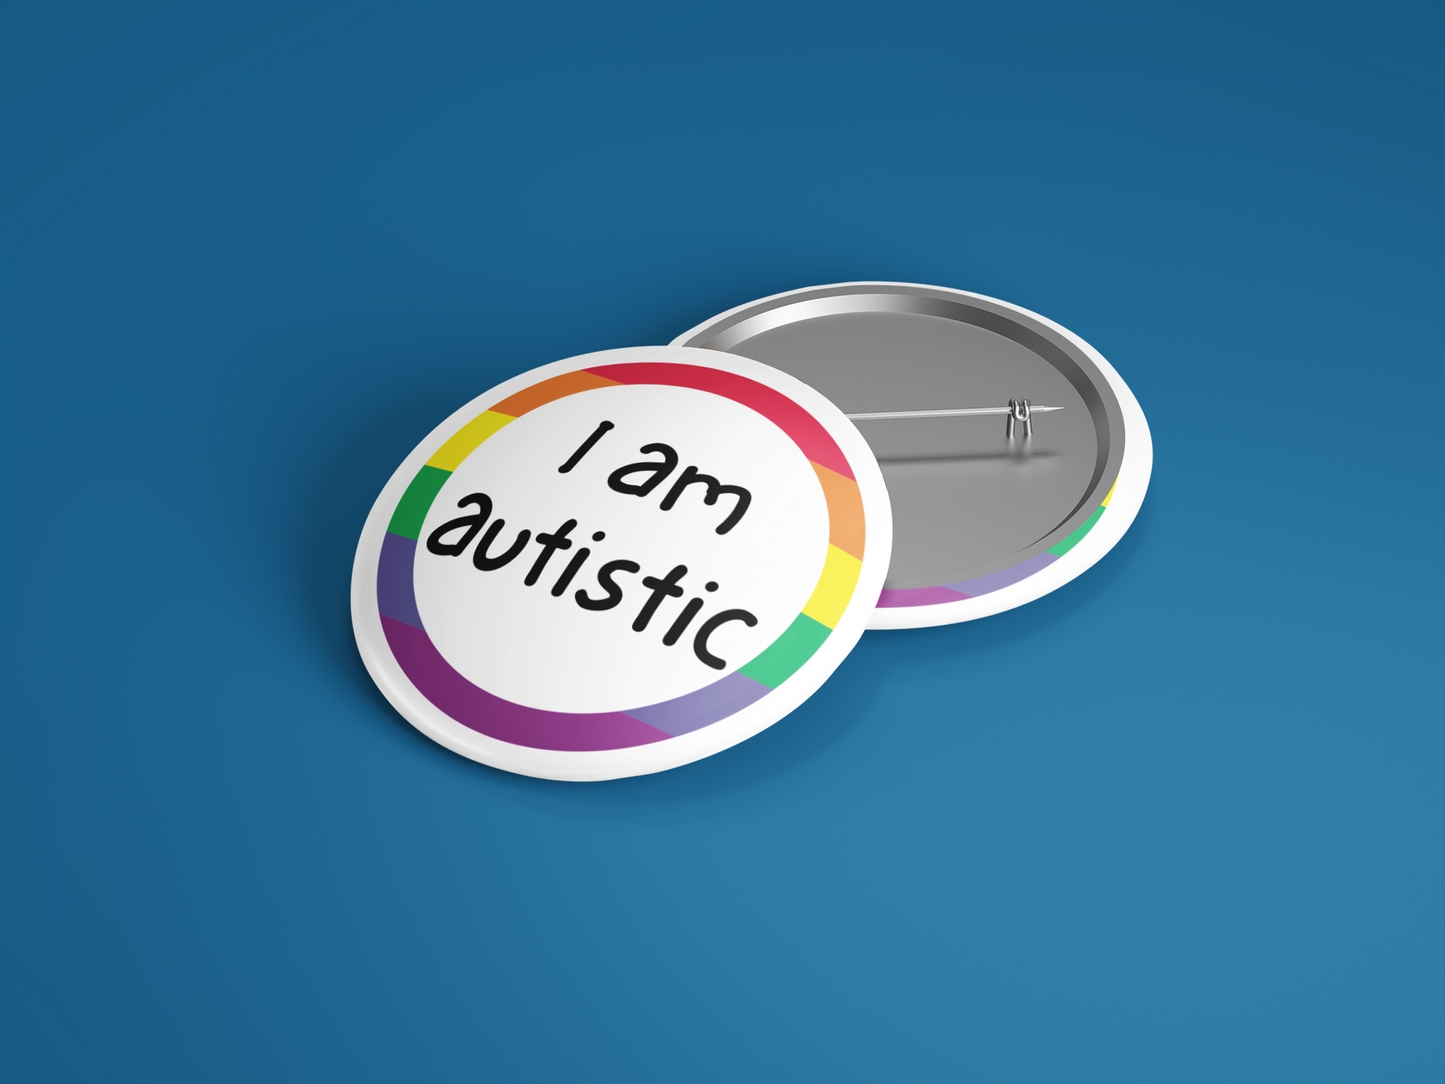 I Am Autistic Button - beyourownherodesign